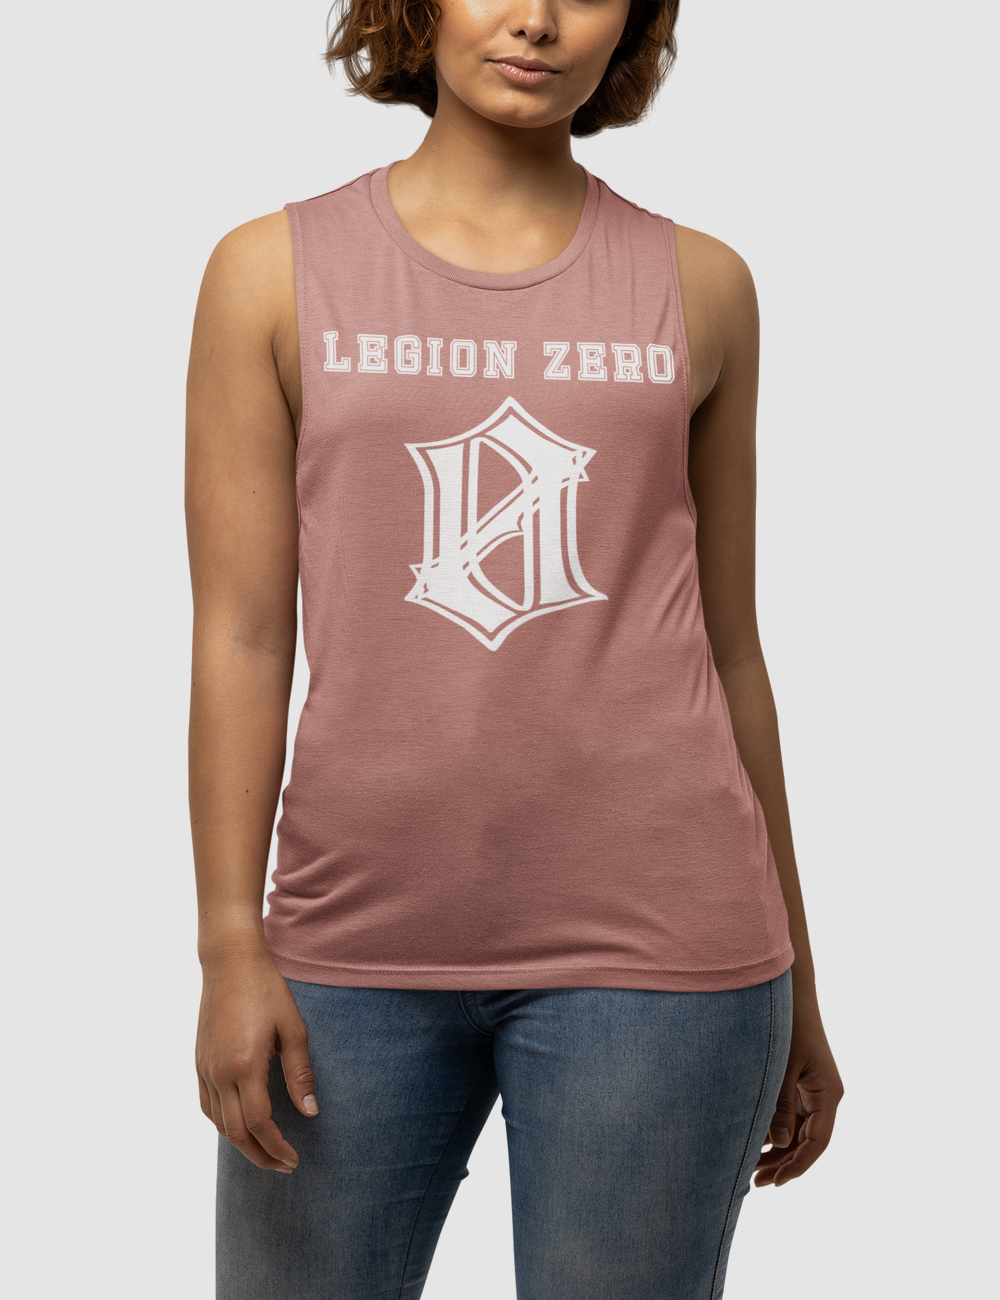 Legion Zero | Women's Muscle Tank Top OniTakai